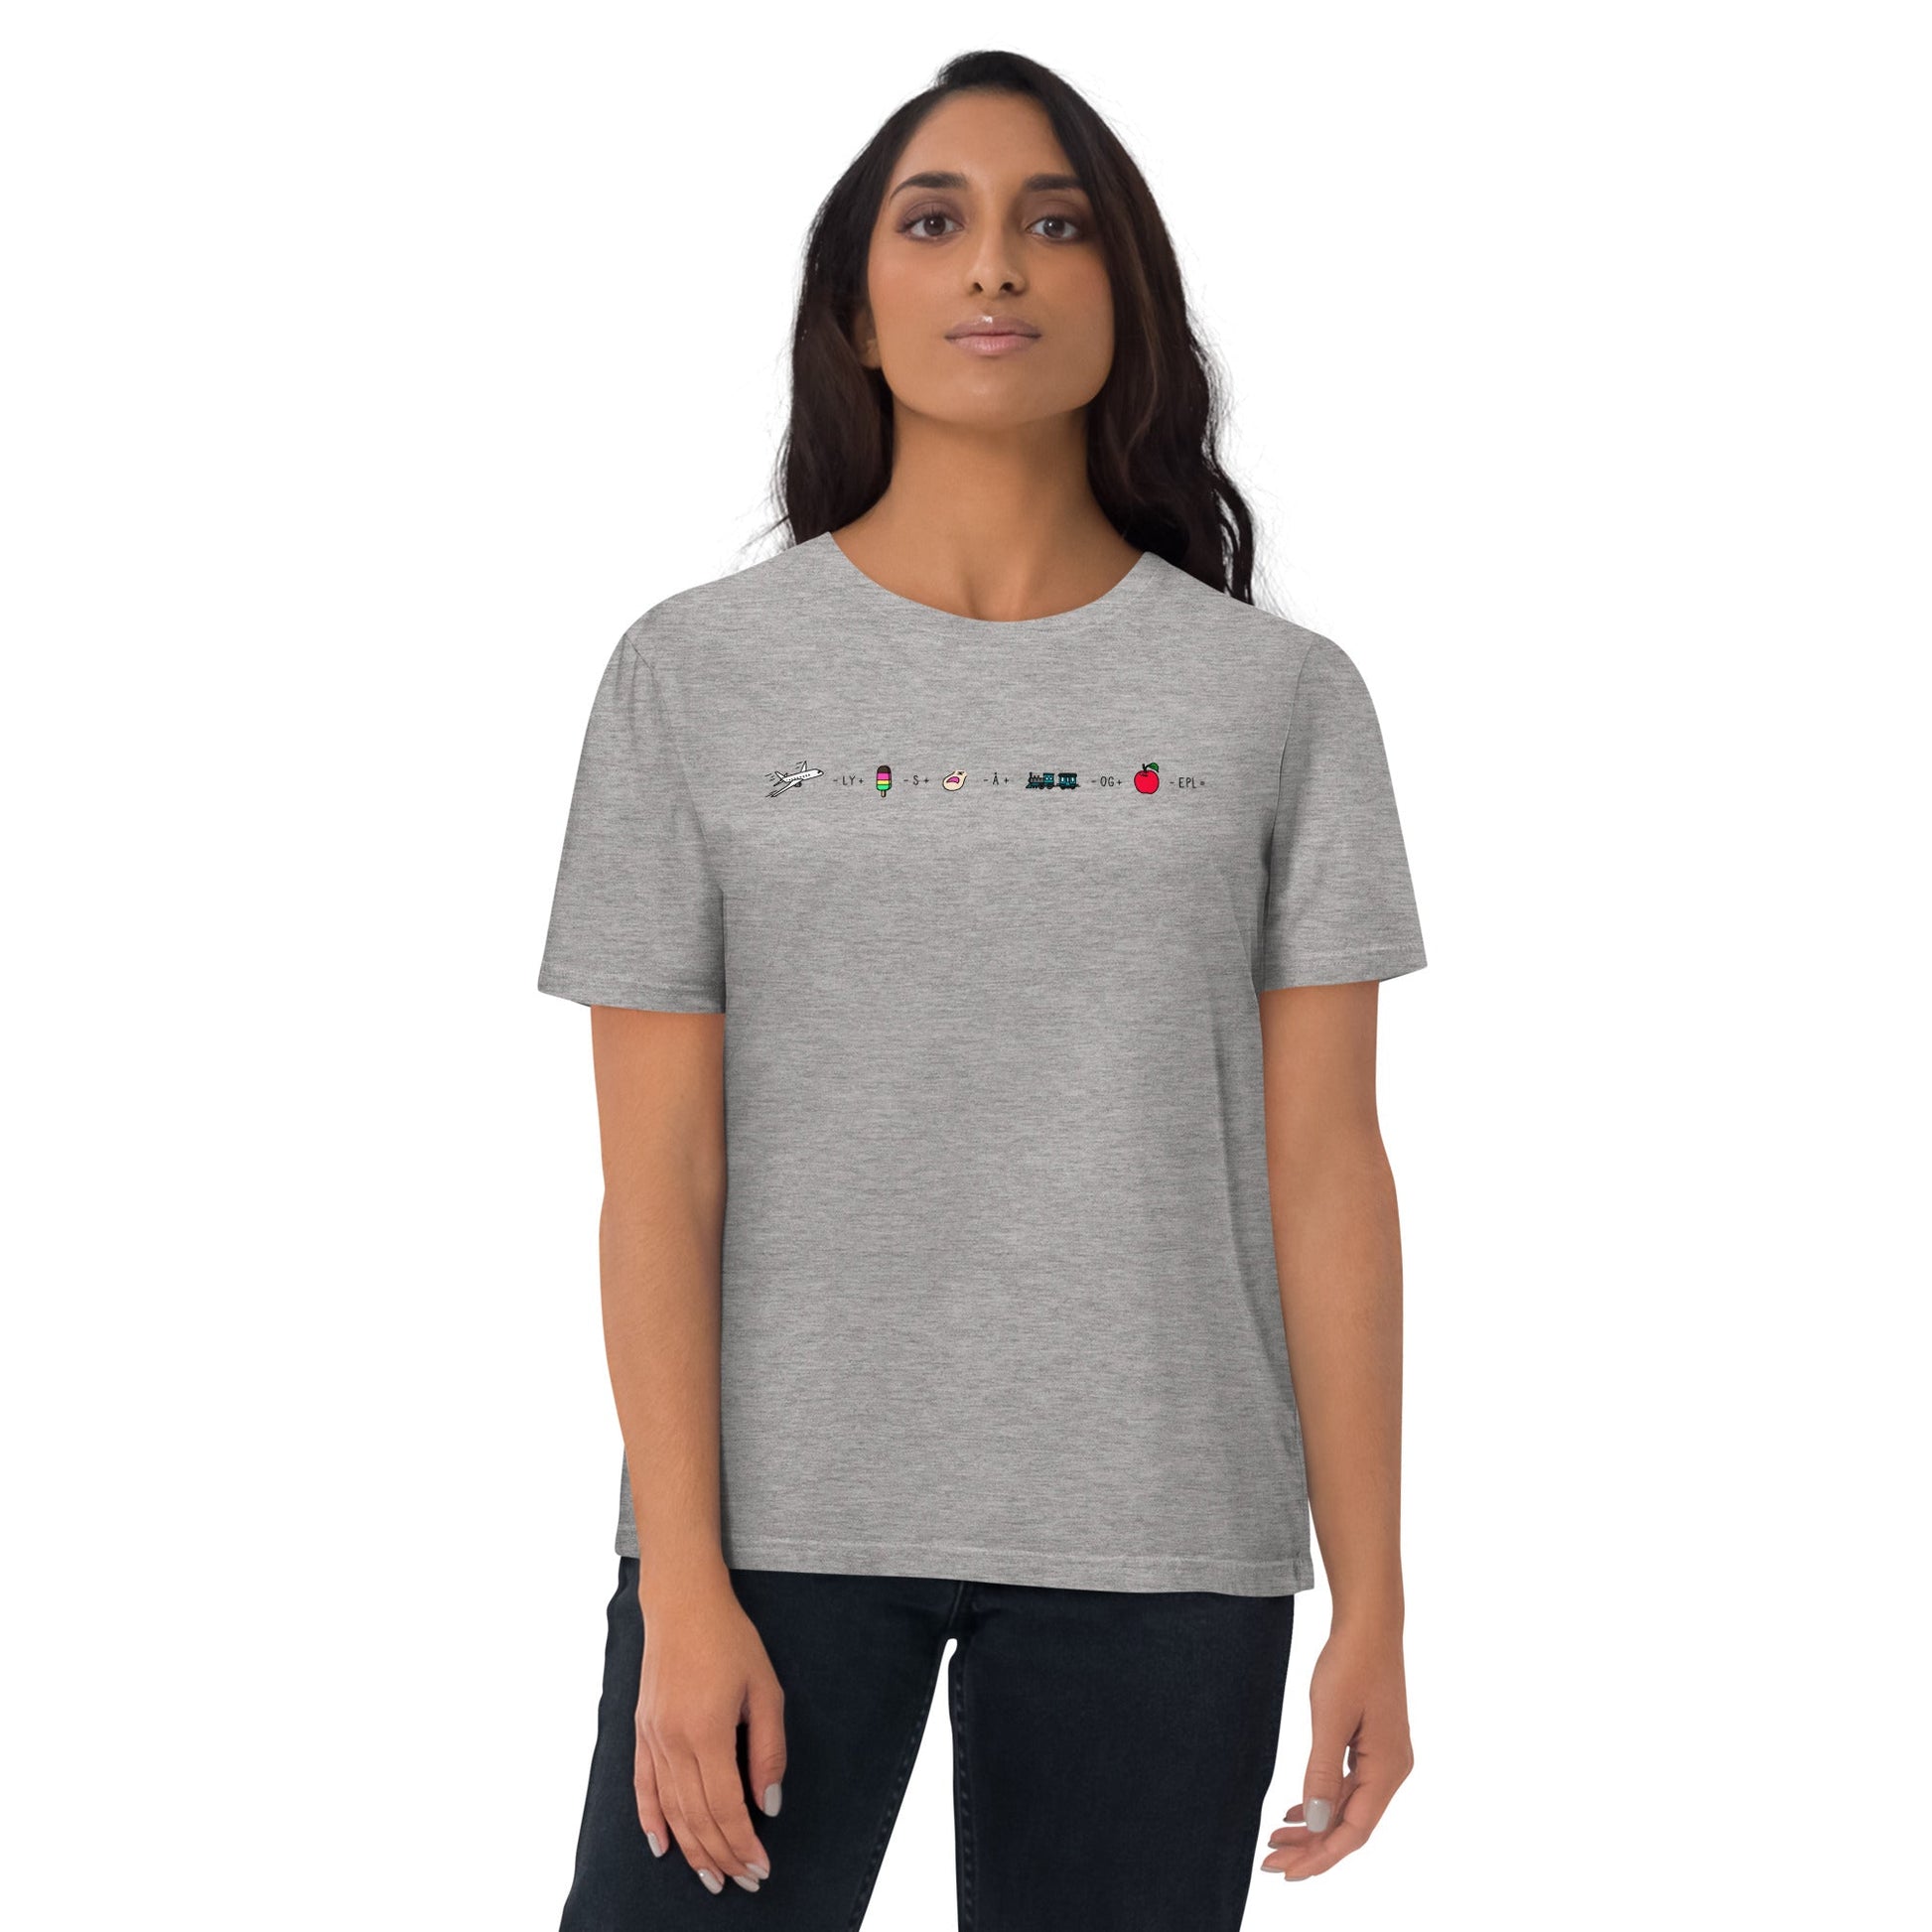 VAGPWR The Puzzle - Unisex eco t-shirt